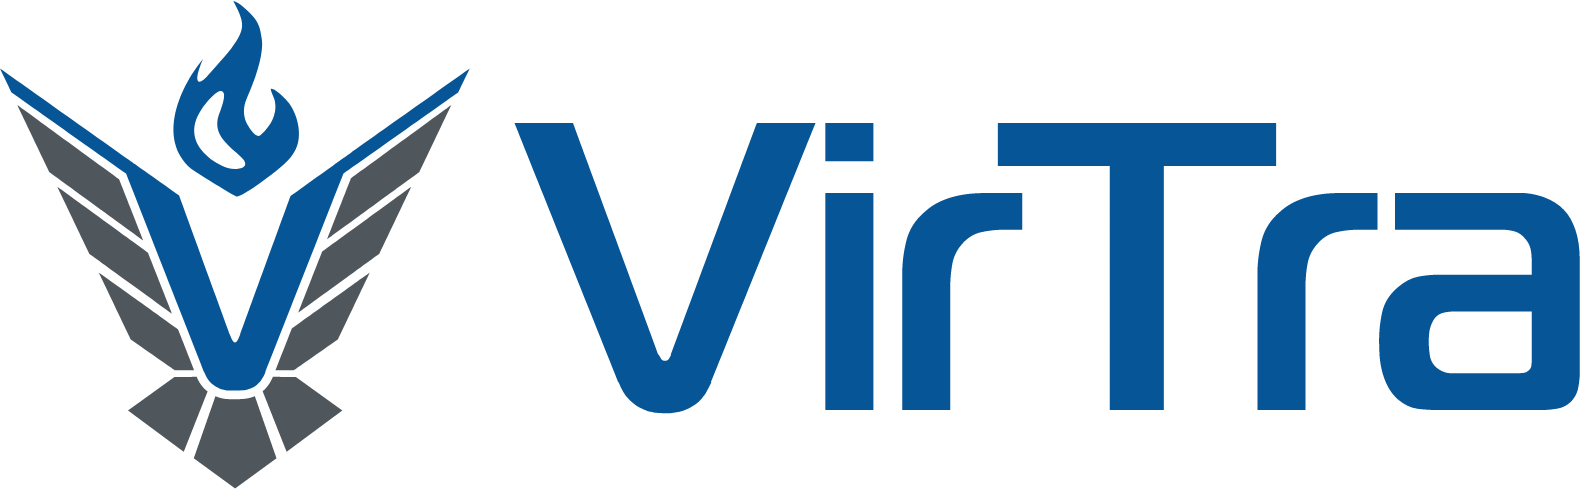 VirTra logo large (transparent PNG)